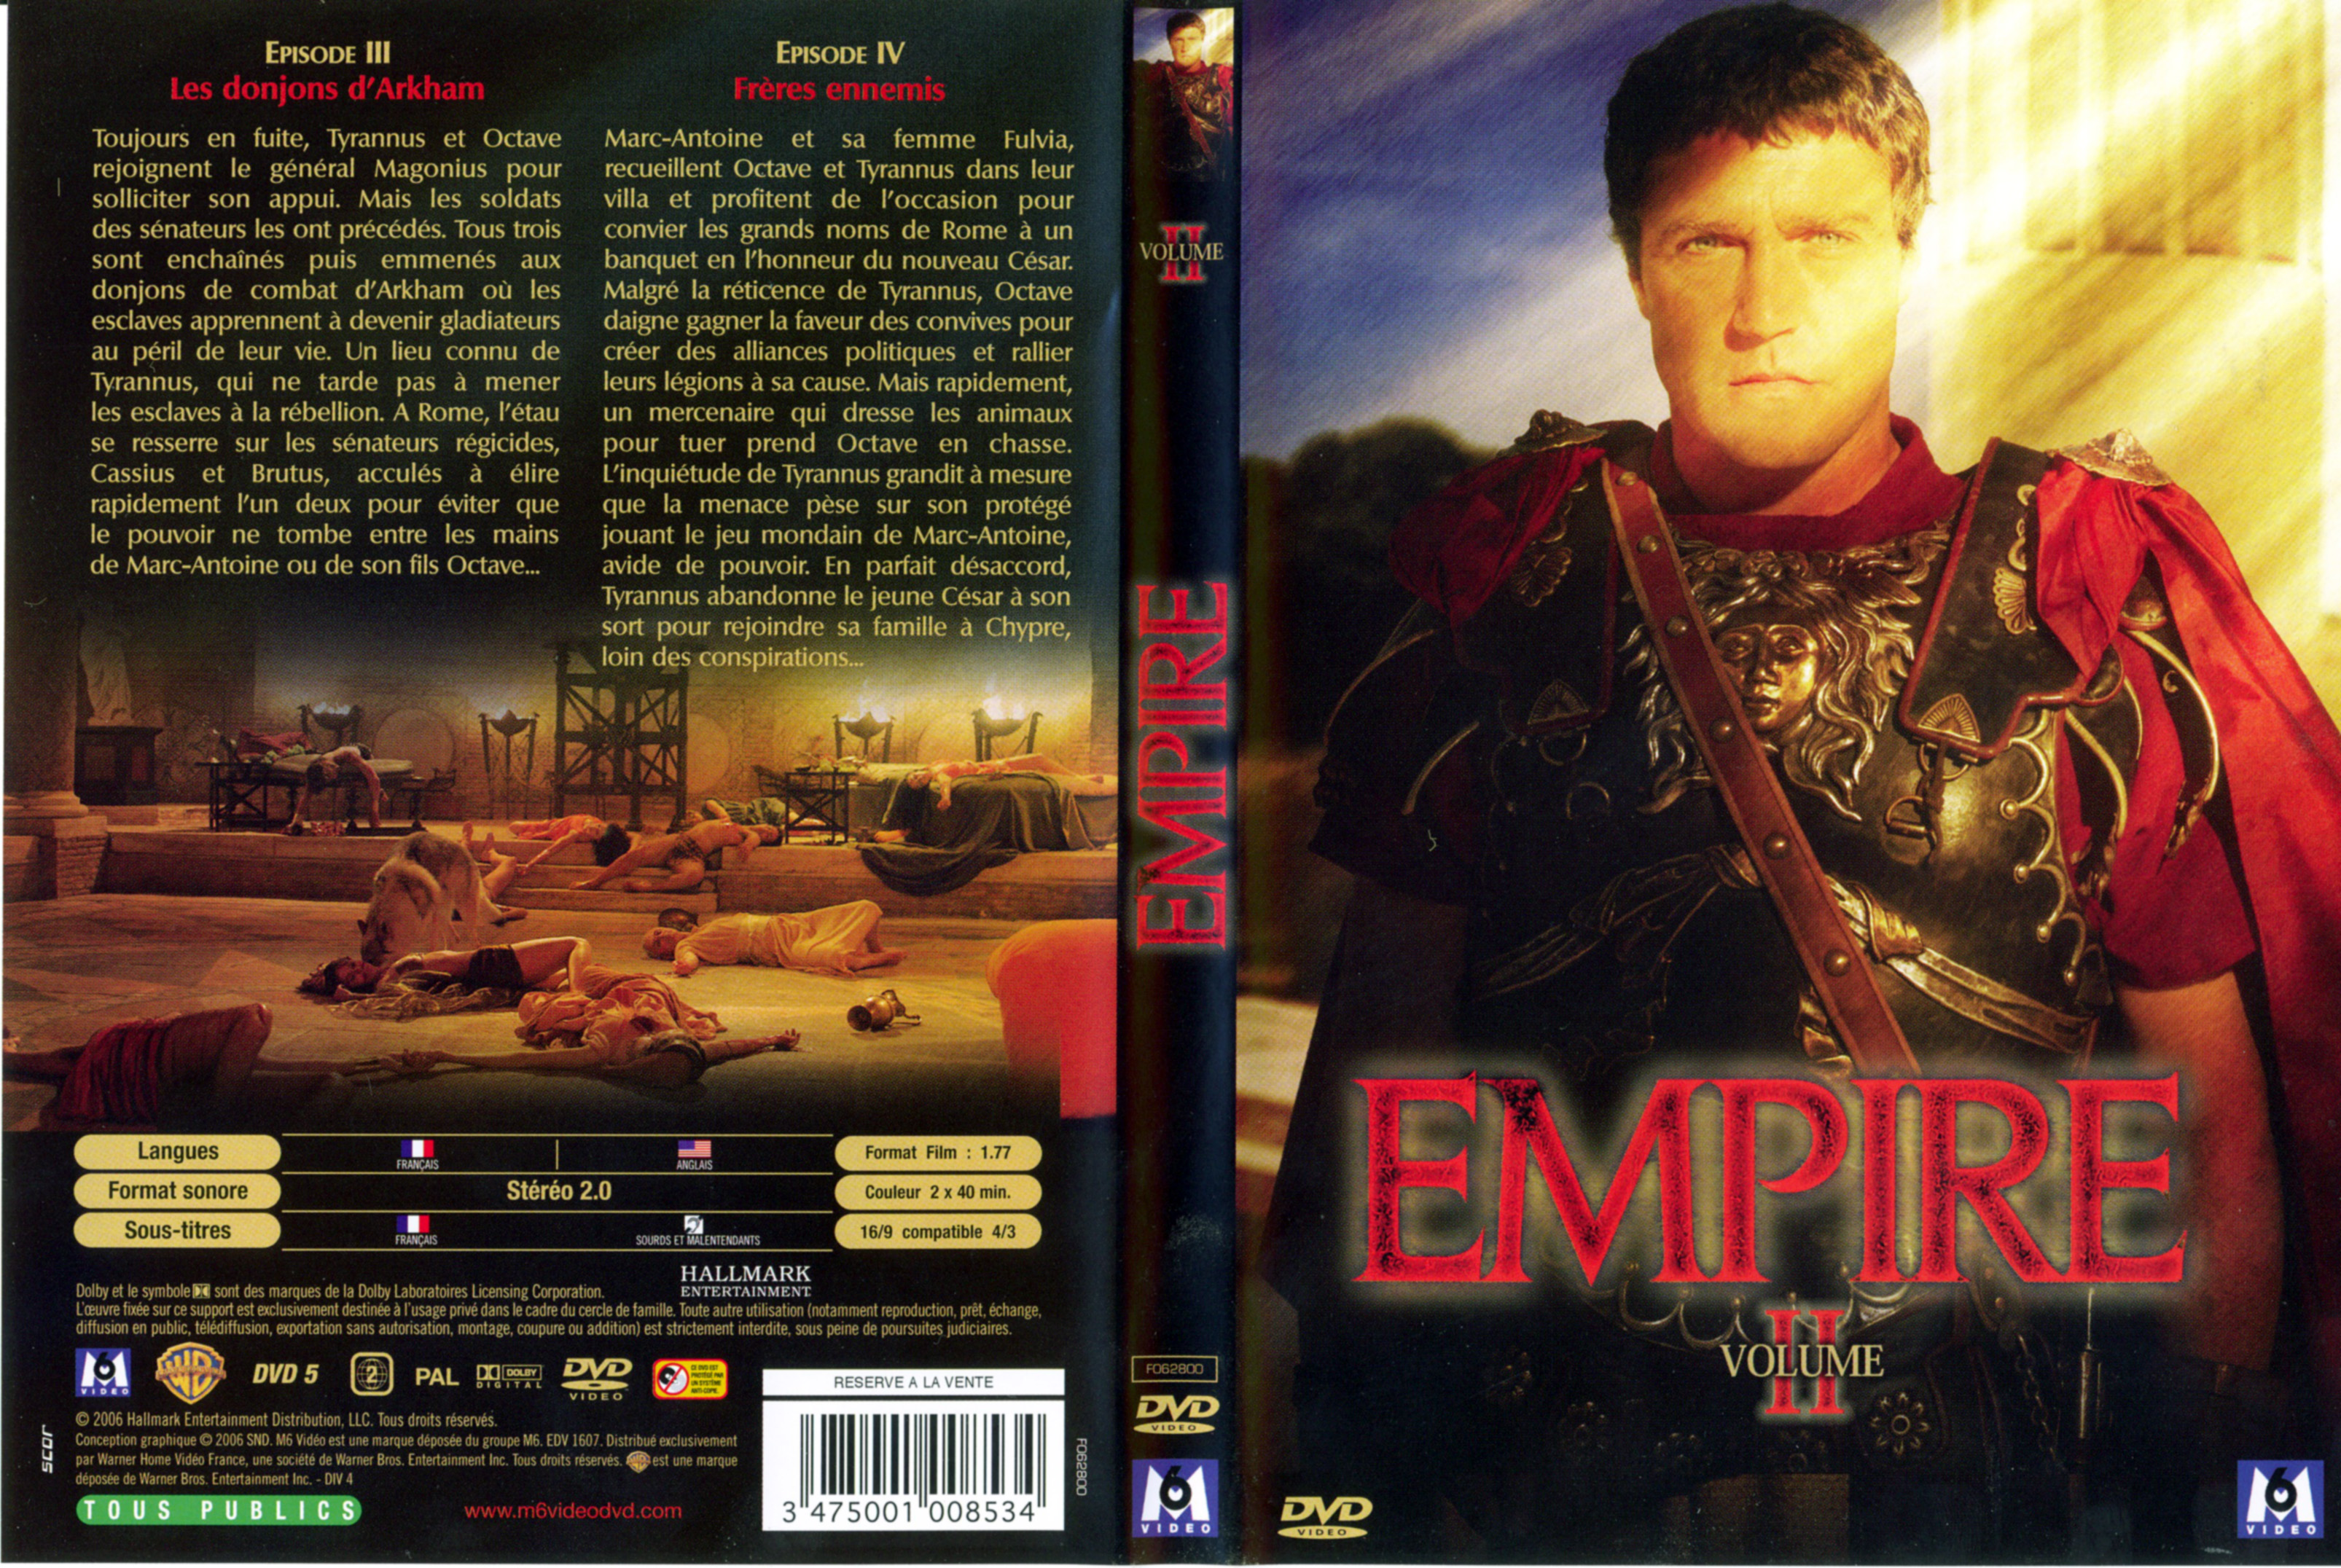 Jaquette DVD Empire vol 2